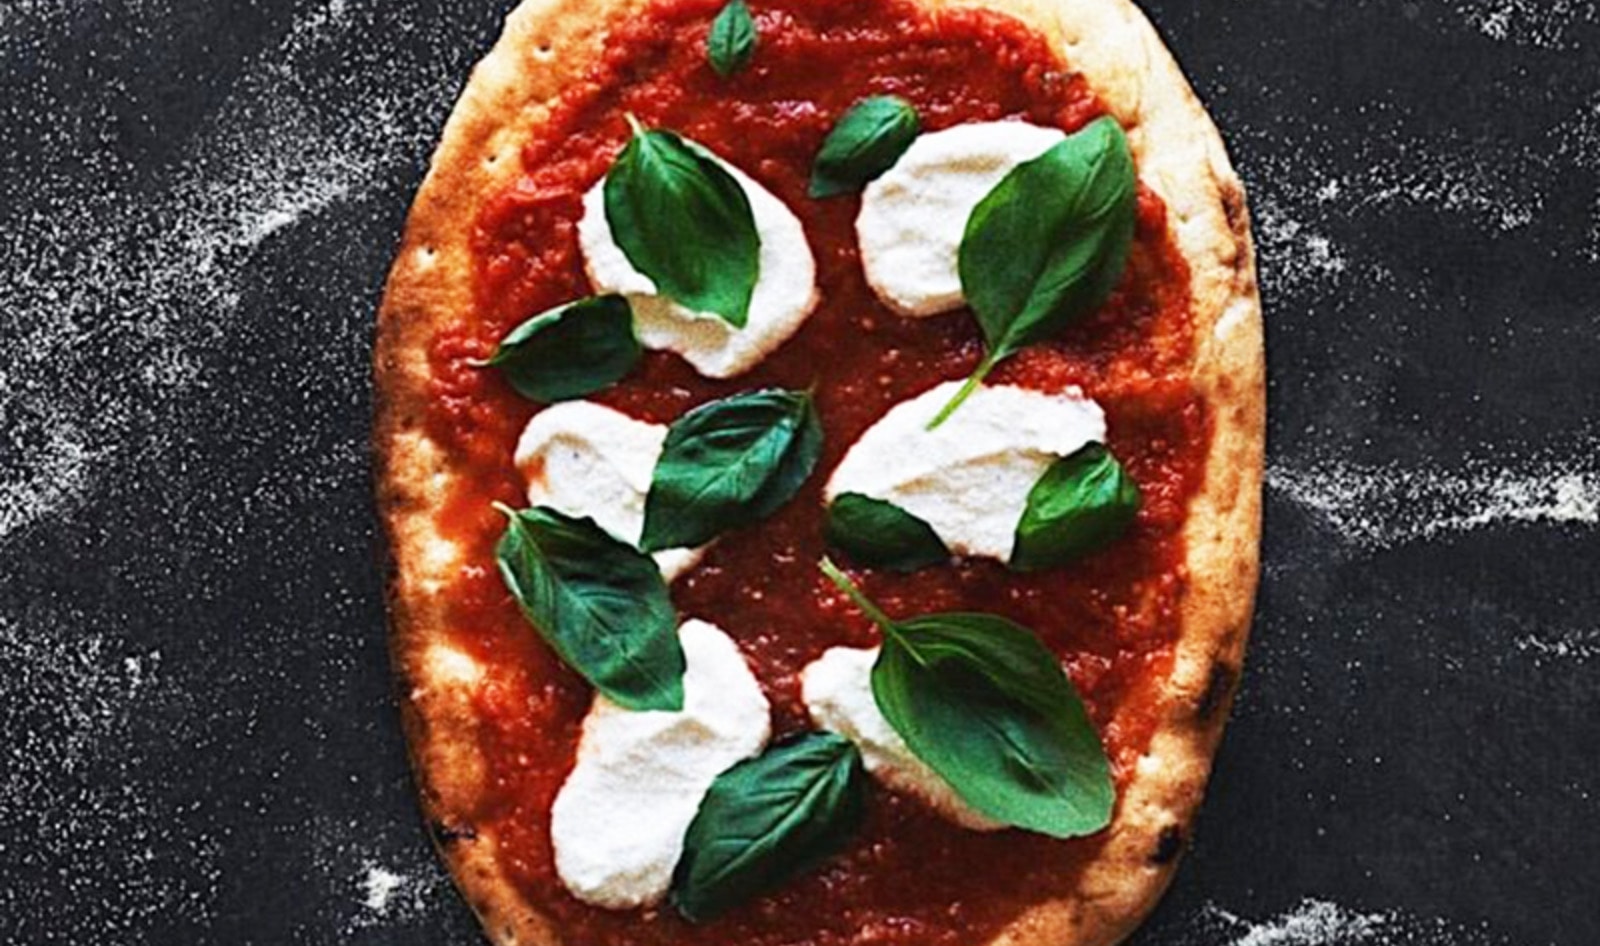 Plant-Based Chef Matthew Kenney to Launch Frozen Vegan Pizza Line